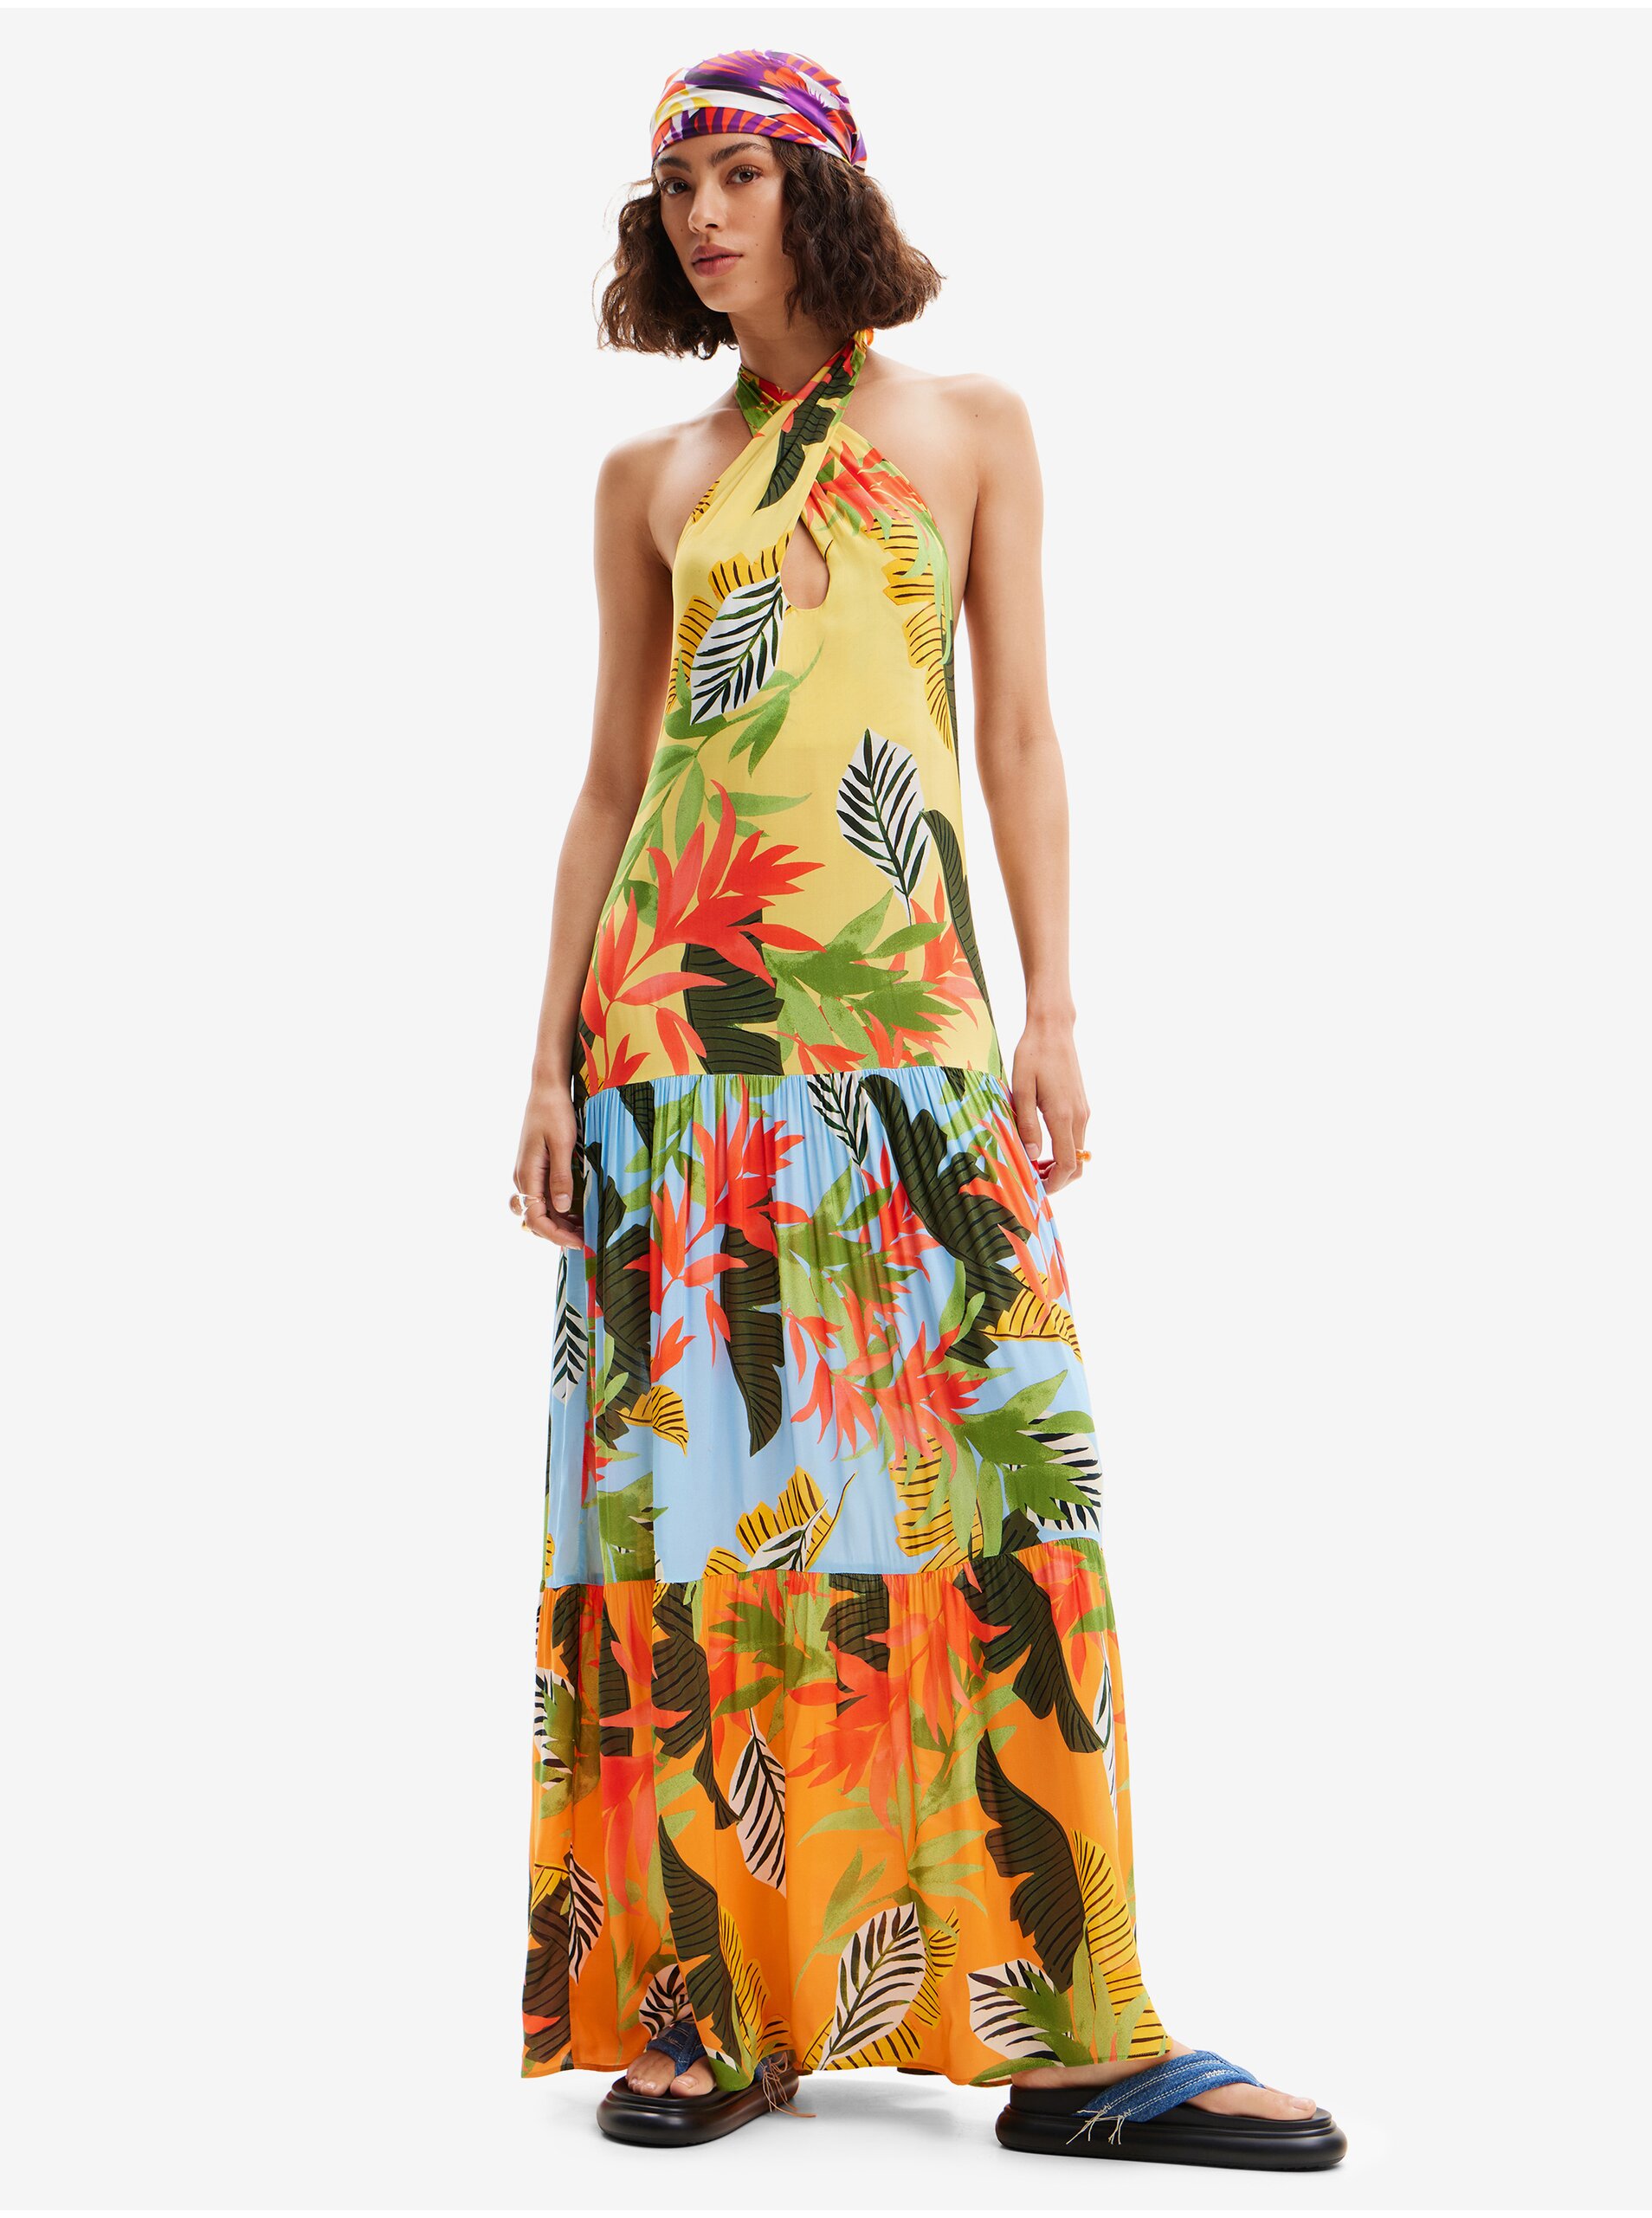 Women's Yellow Floral Beach Maxi Dress Desigual Tropi - Women